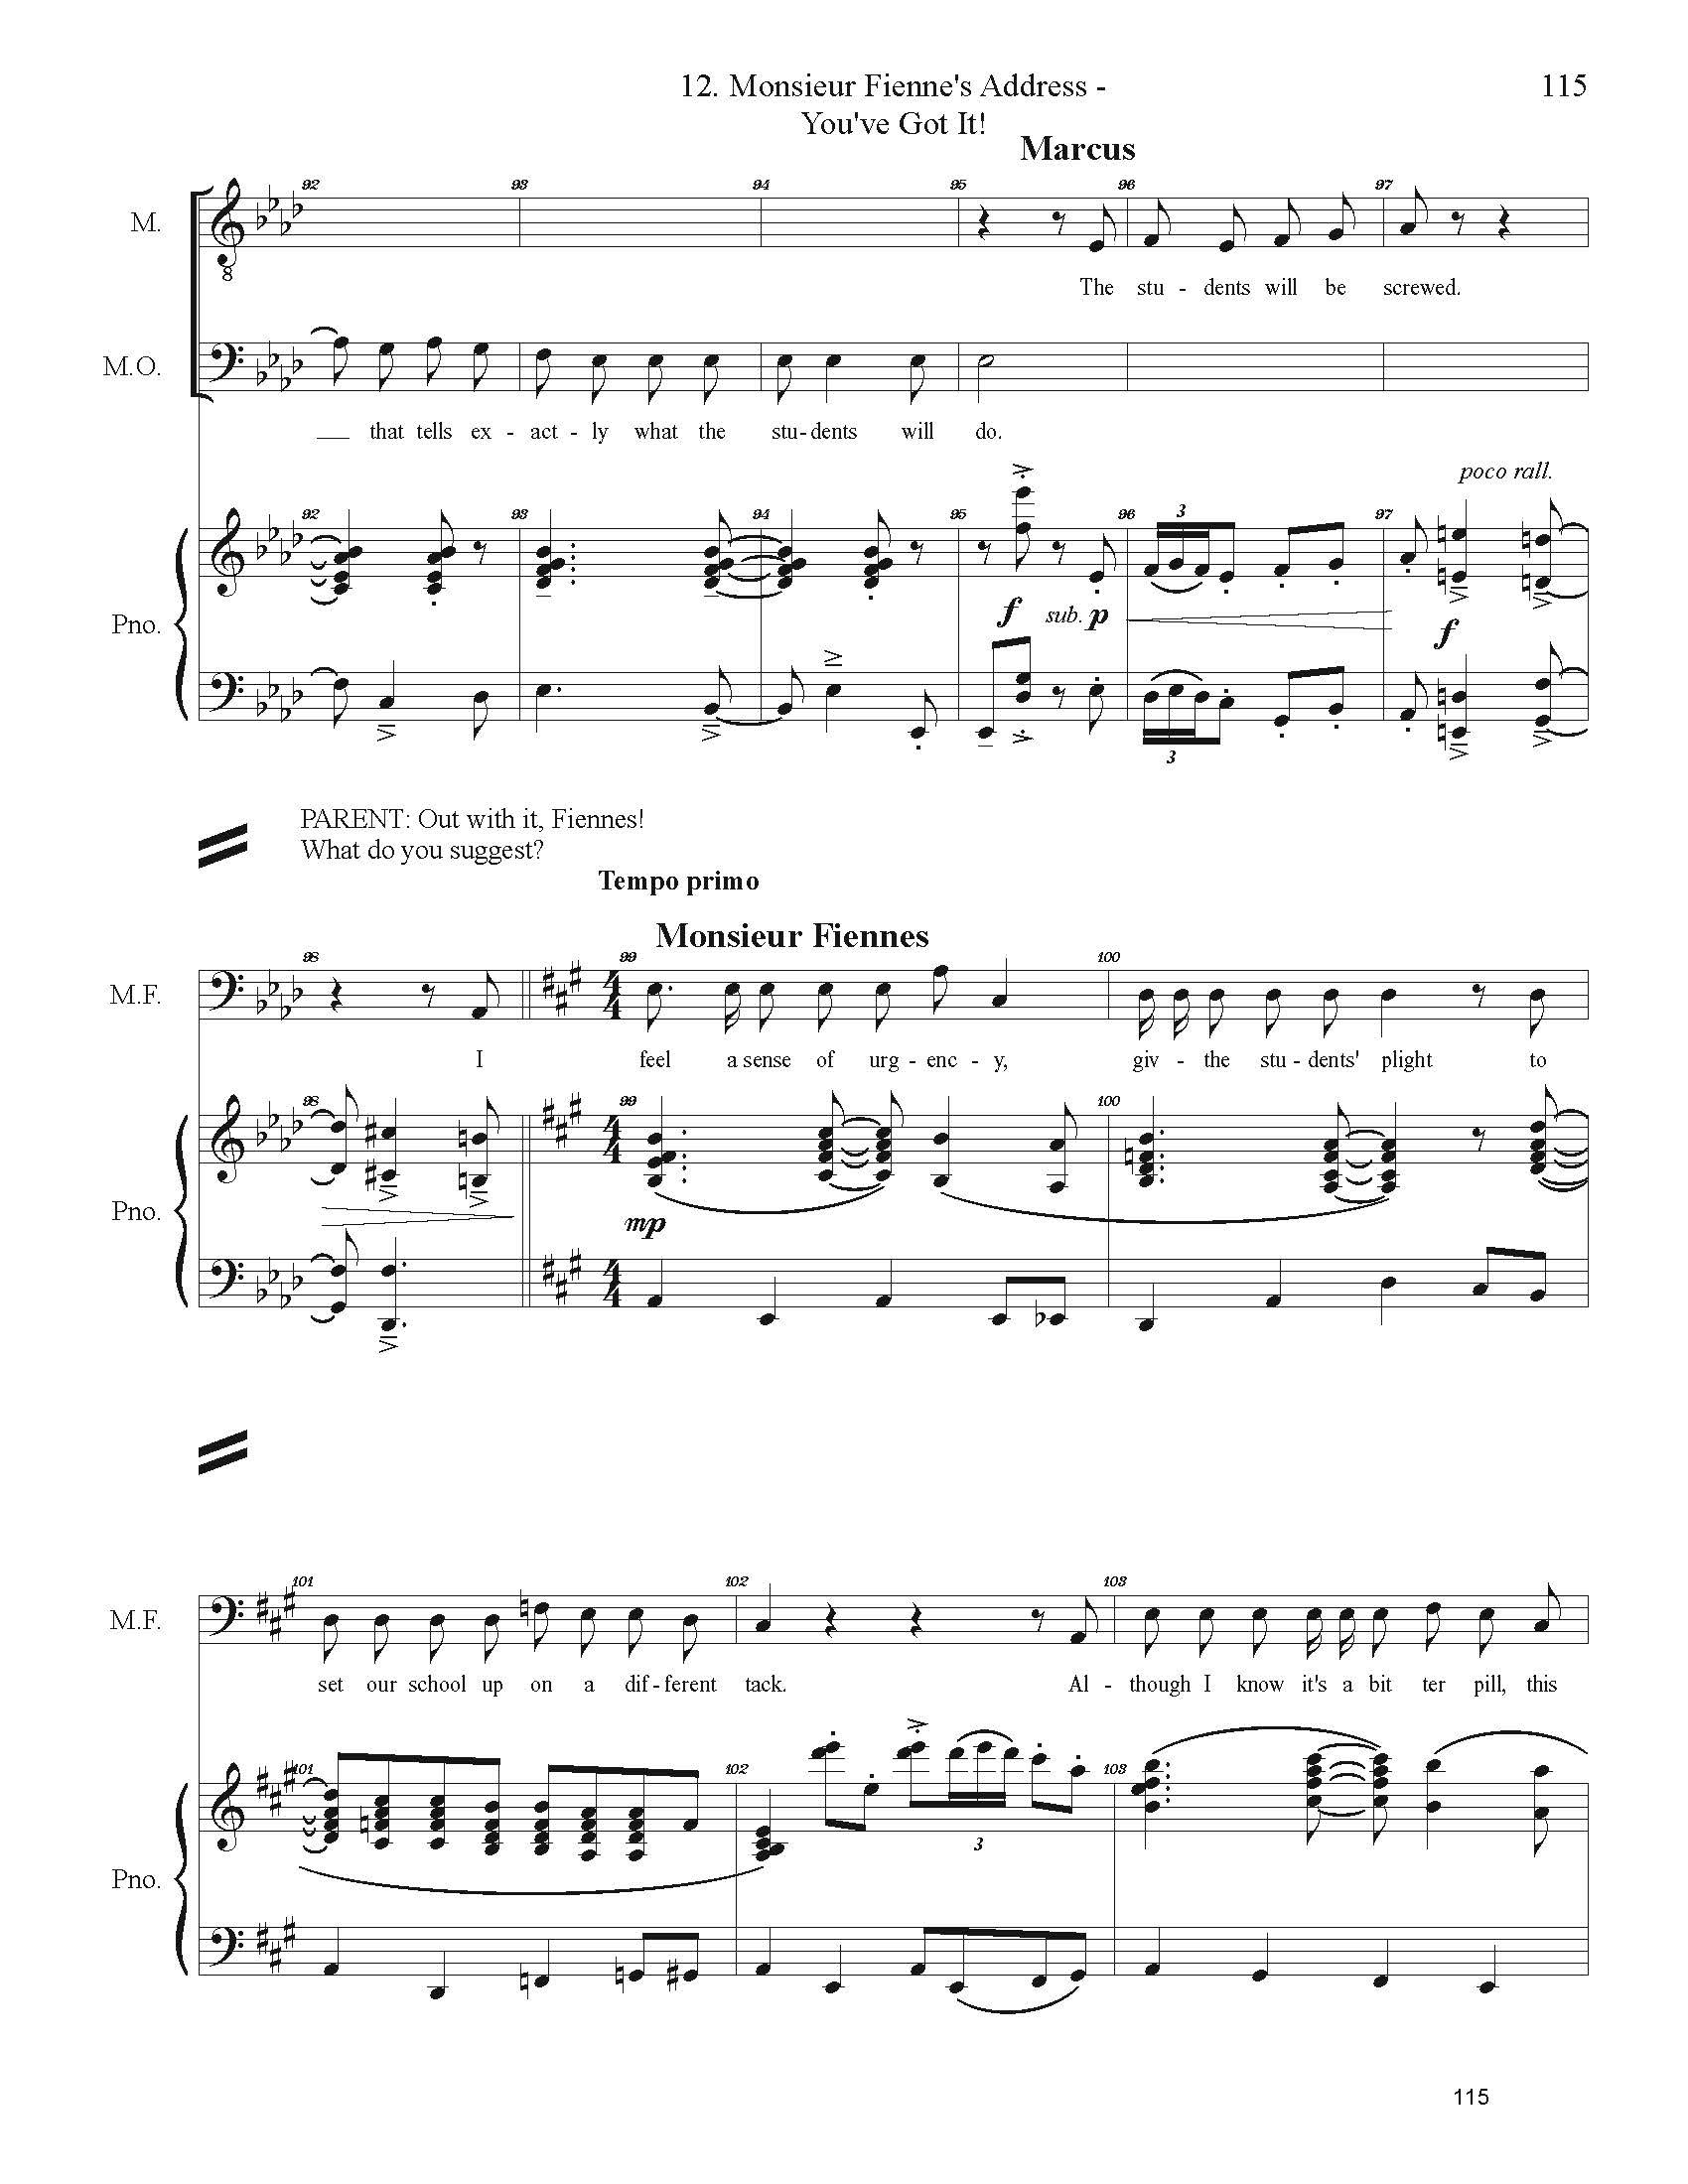 FULL PIANO VOCAL SCORE DRAFT 1 - Score_Page_115.jpg